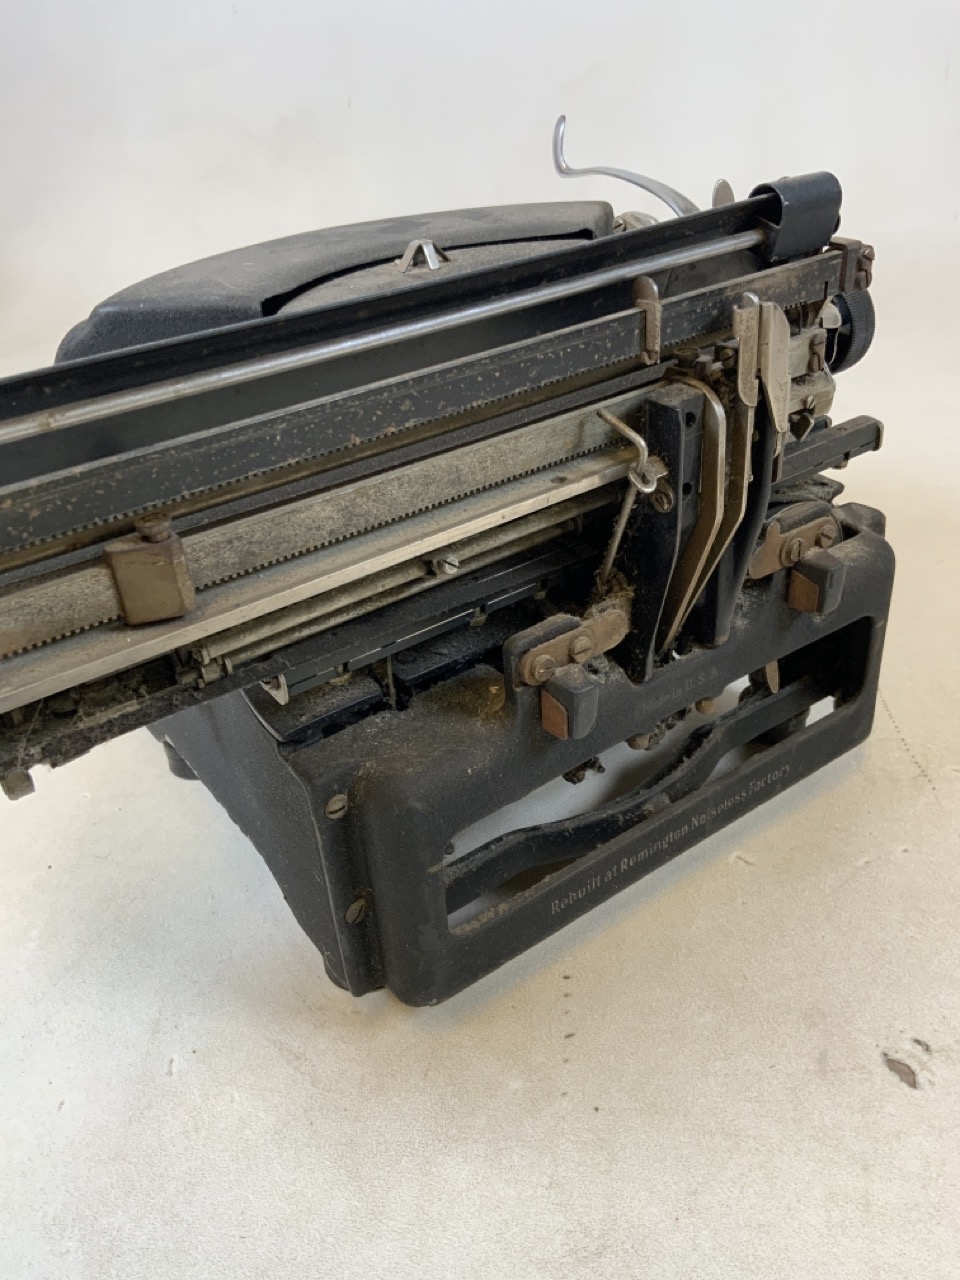 A Remington Noiseless typewriter. - Image 5 of 5